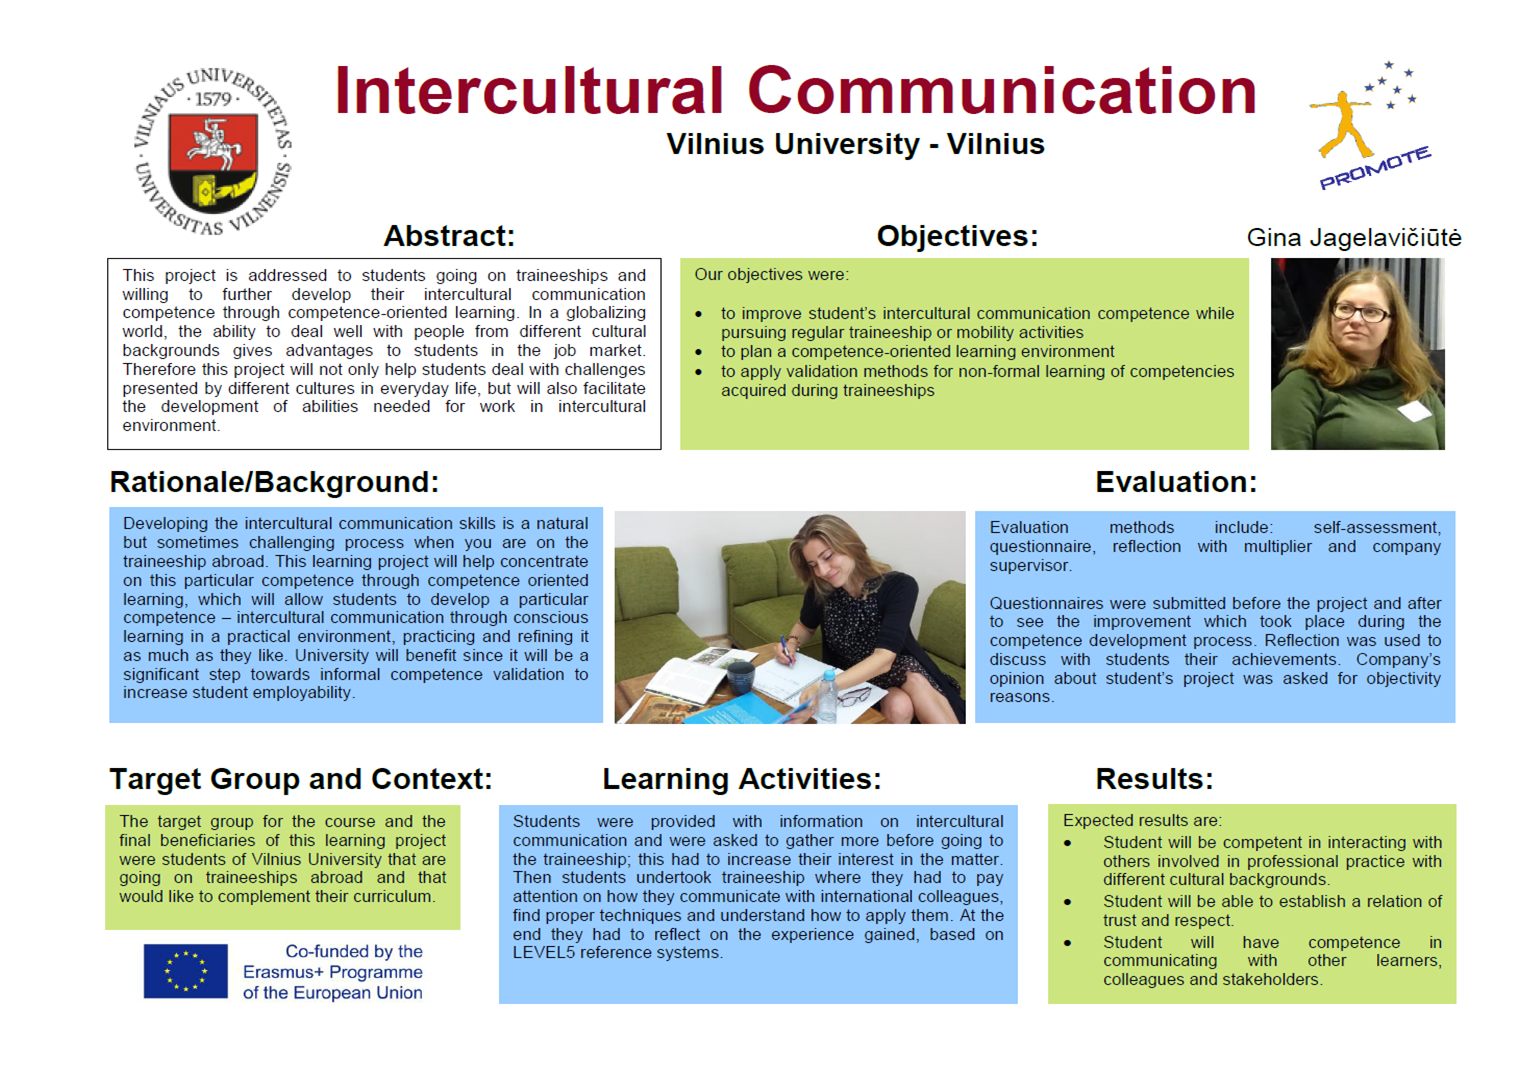 UV_Intercultural_communication.png